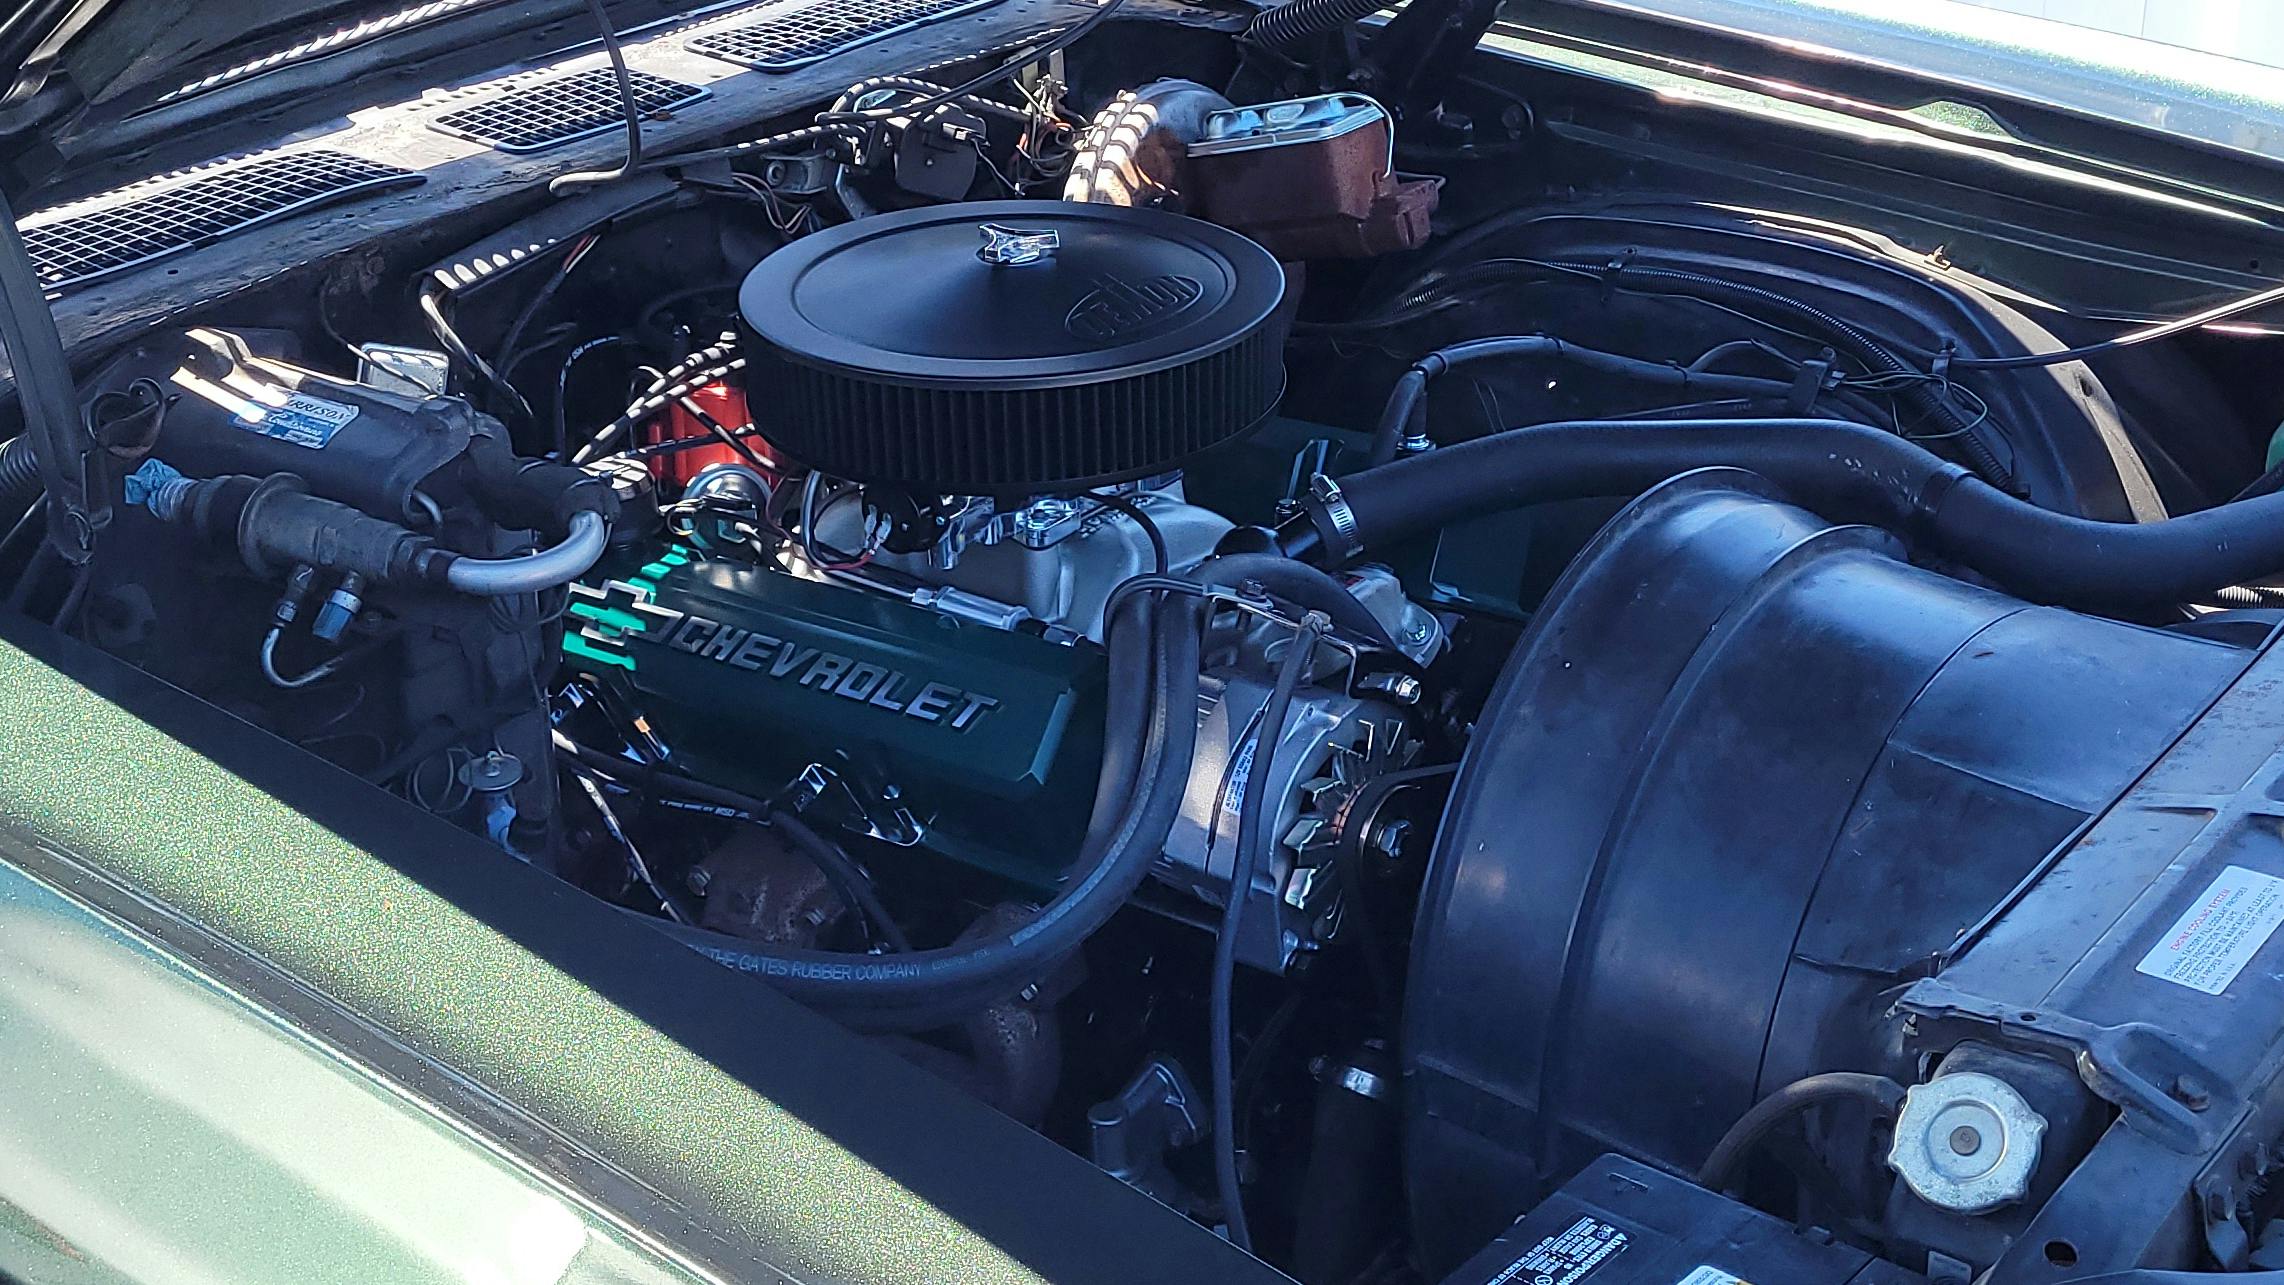 1972 Monte Carlo engine